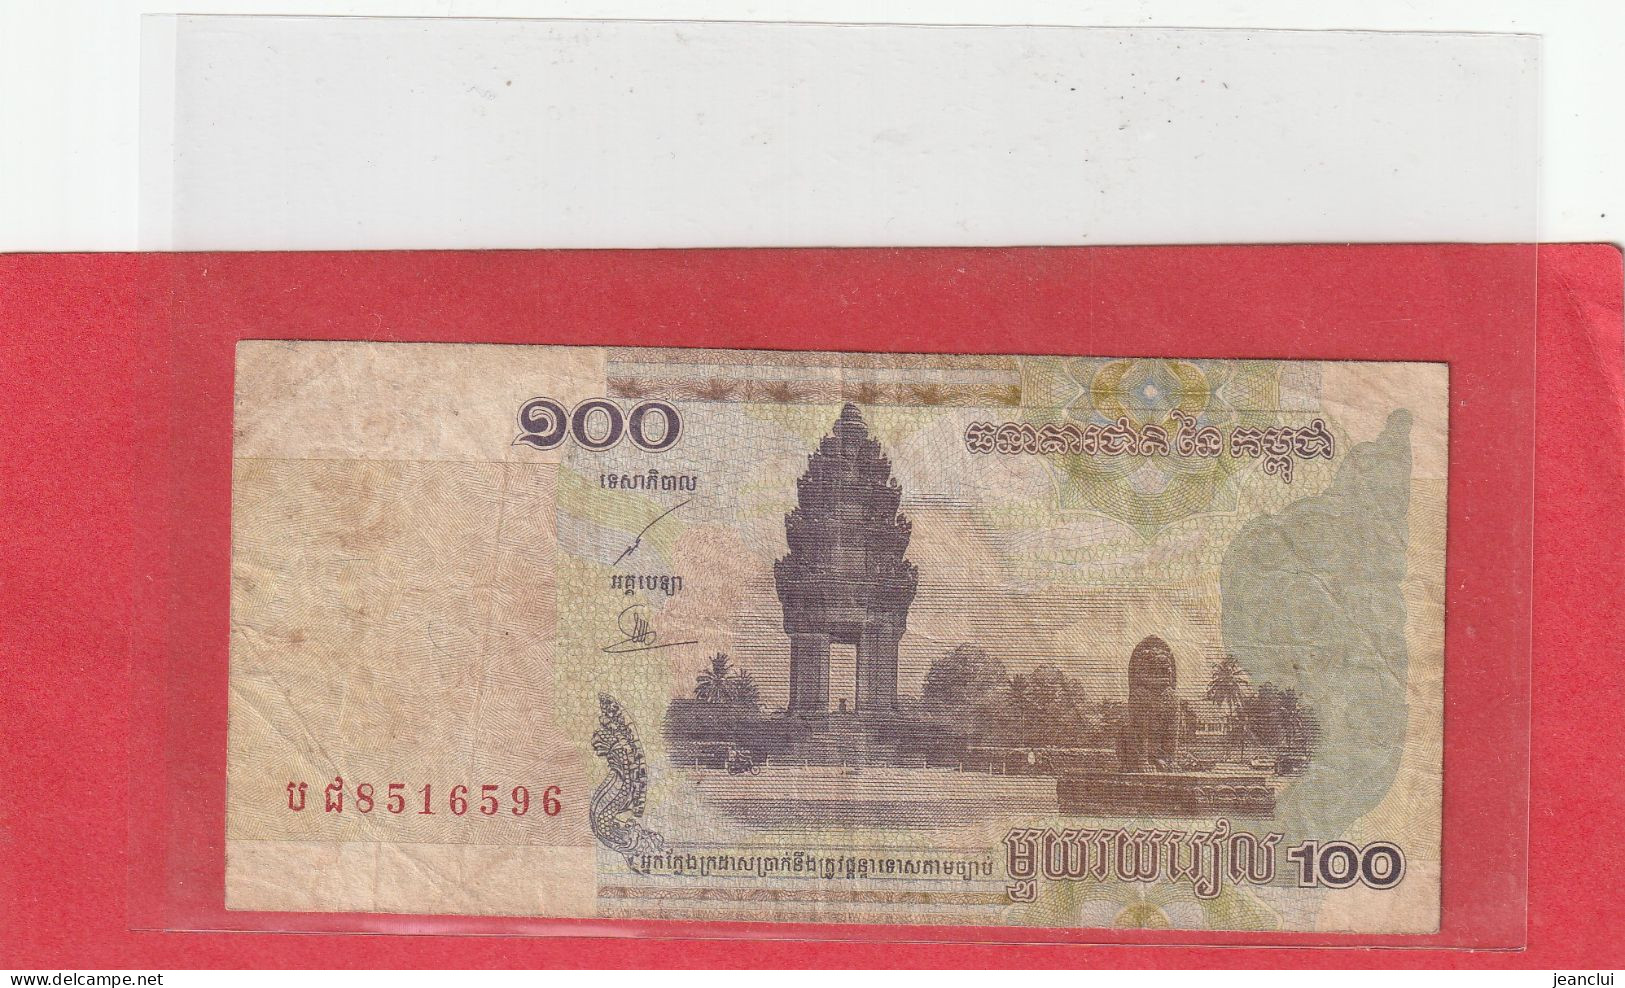 BANQUE NATIONALE DU CAMBODGE  .  100 RIELS  . 2001  . N°  8516596  .  BILLET USITE  .  2 SCANNES - Cambogia